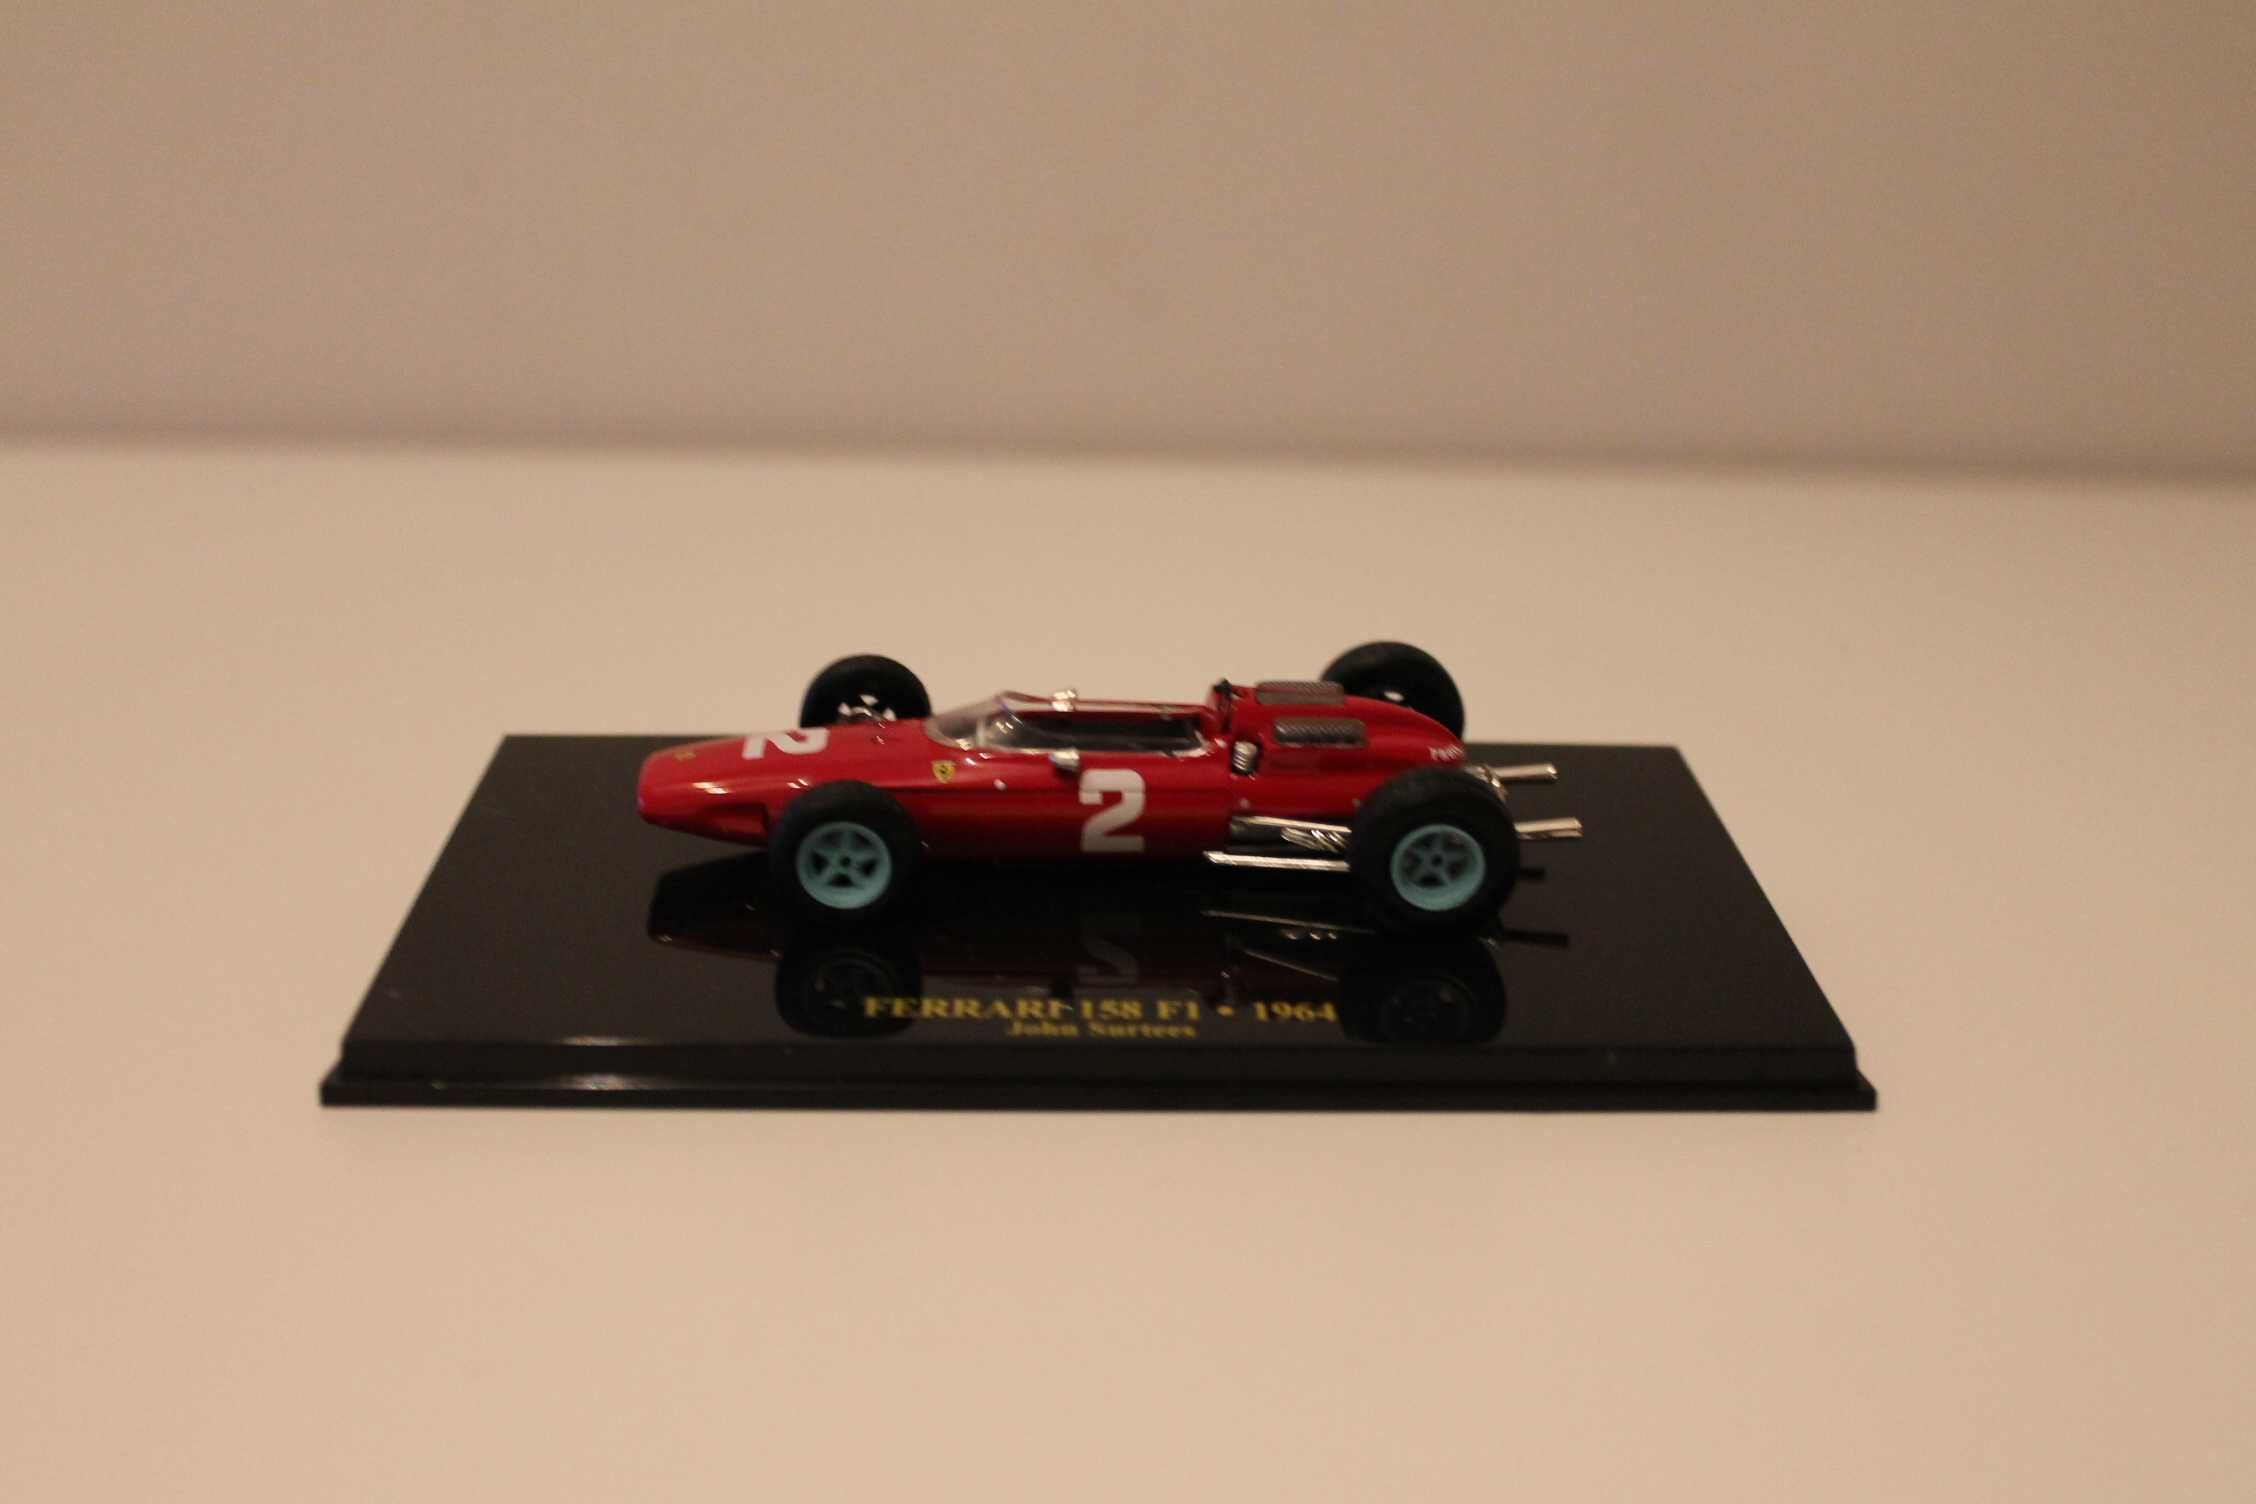 Ferrari 158 F1 1964 skala 1:43